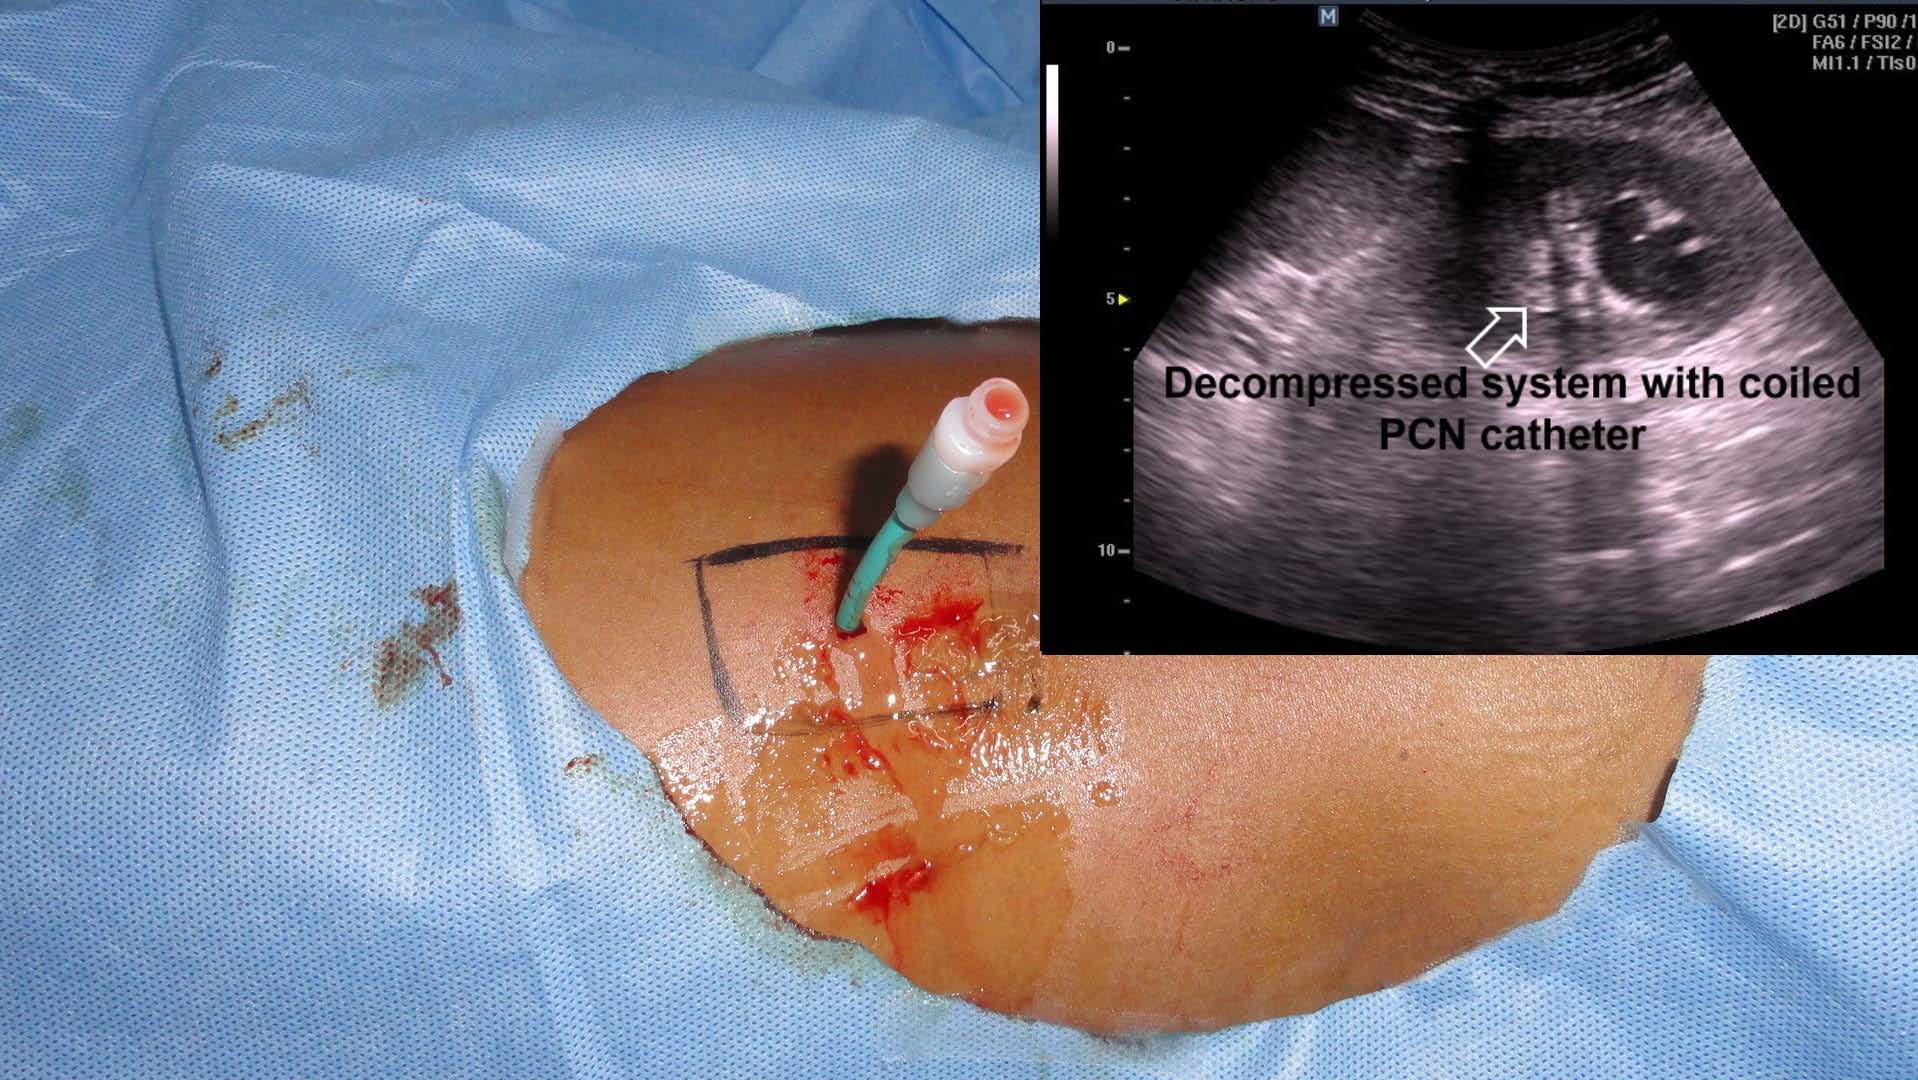 percutaneous nephrostomy